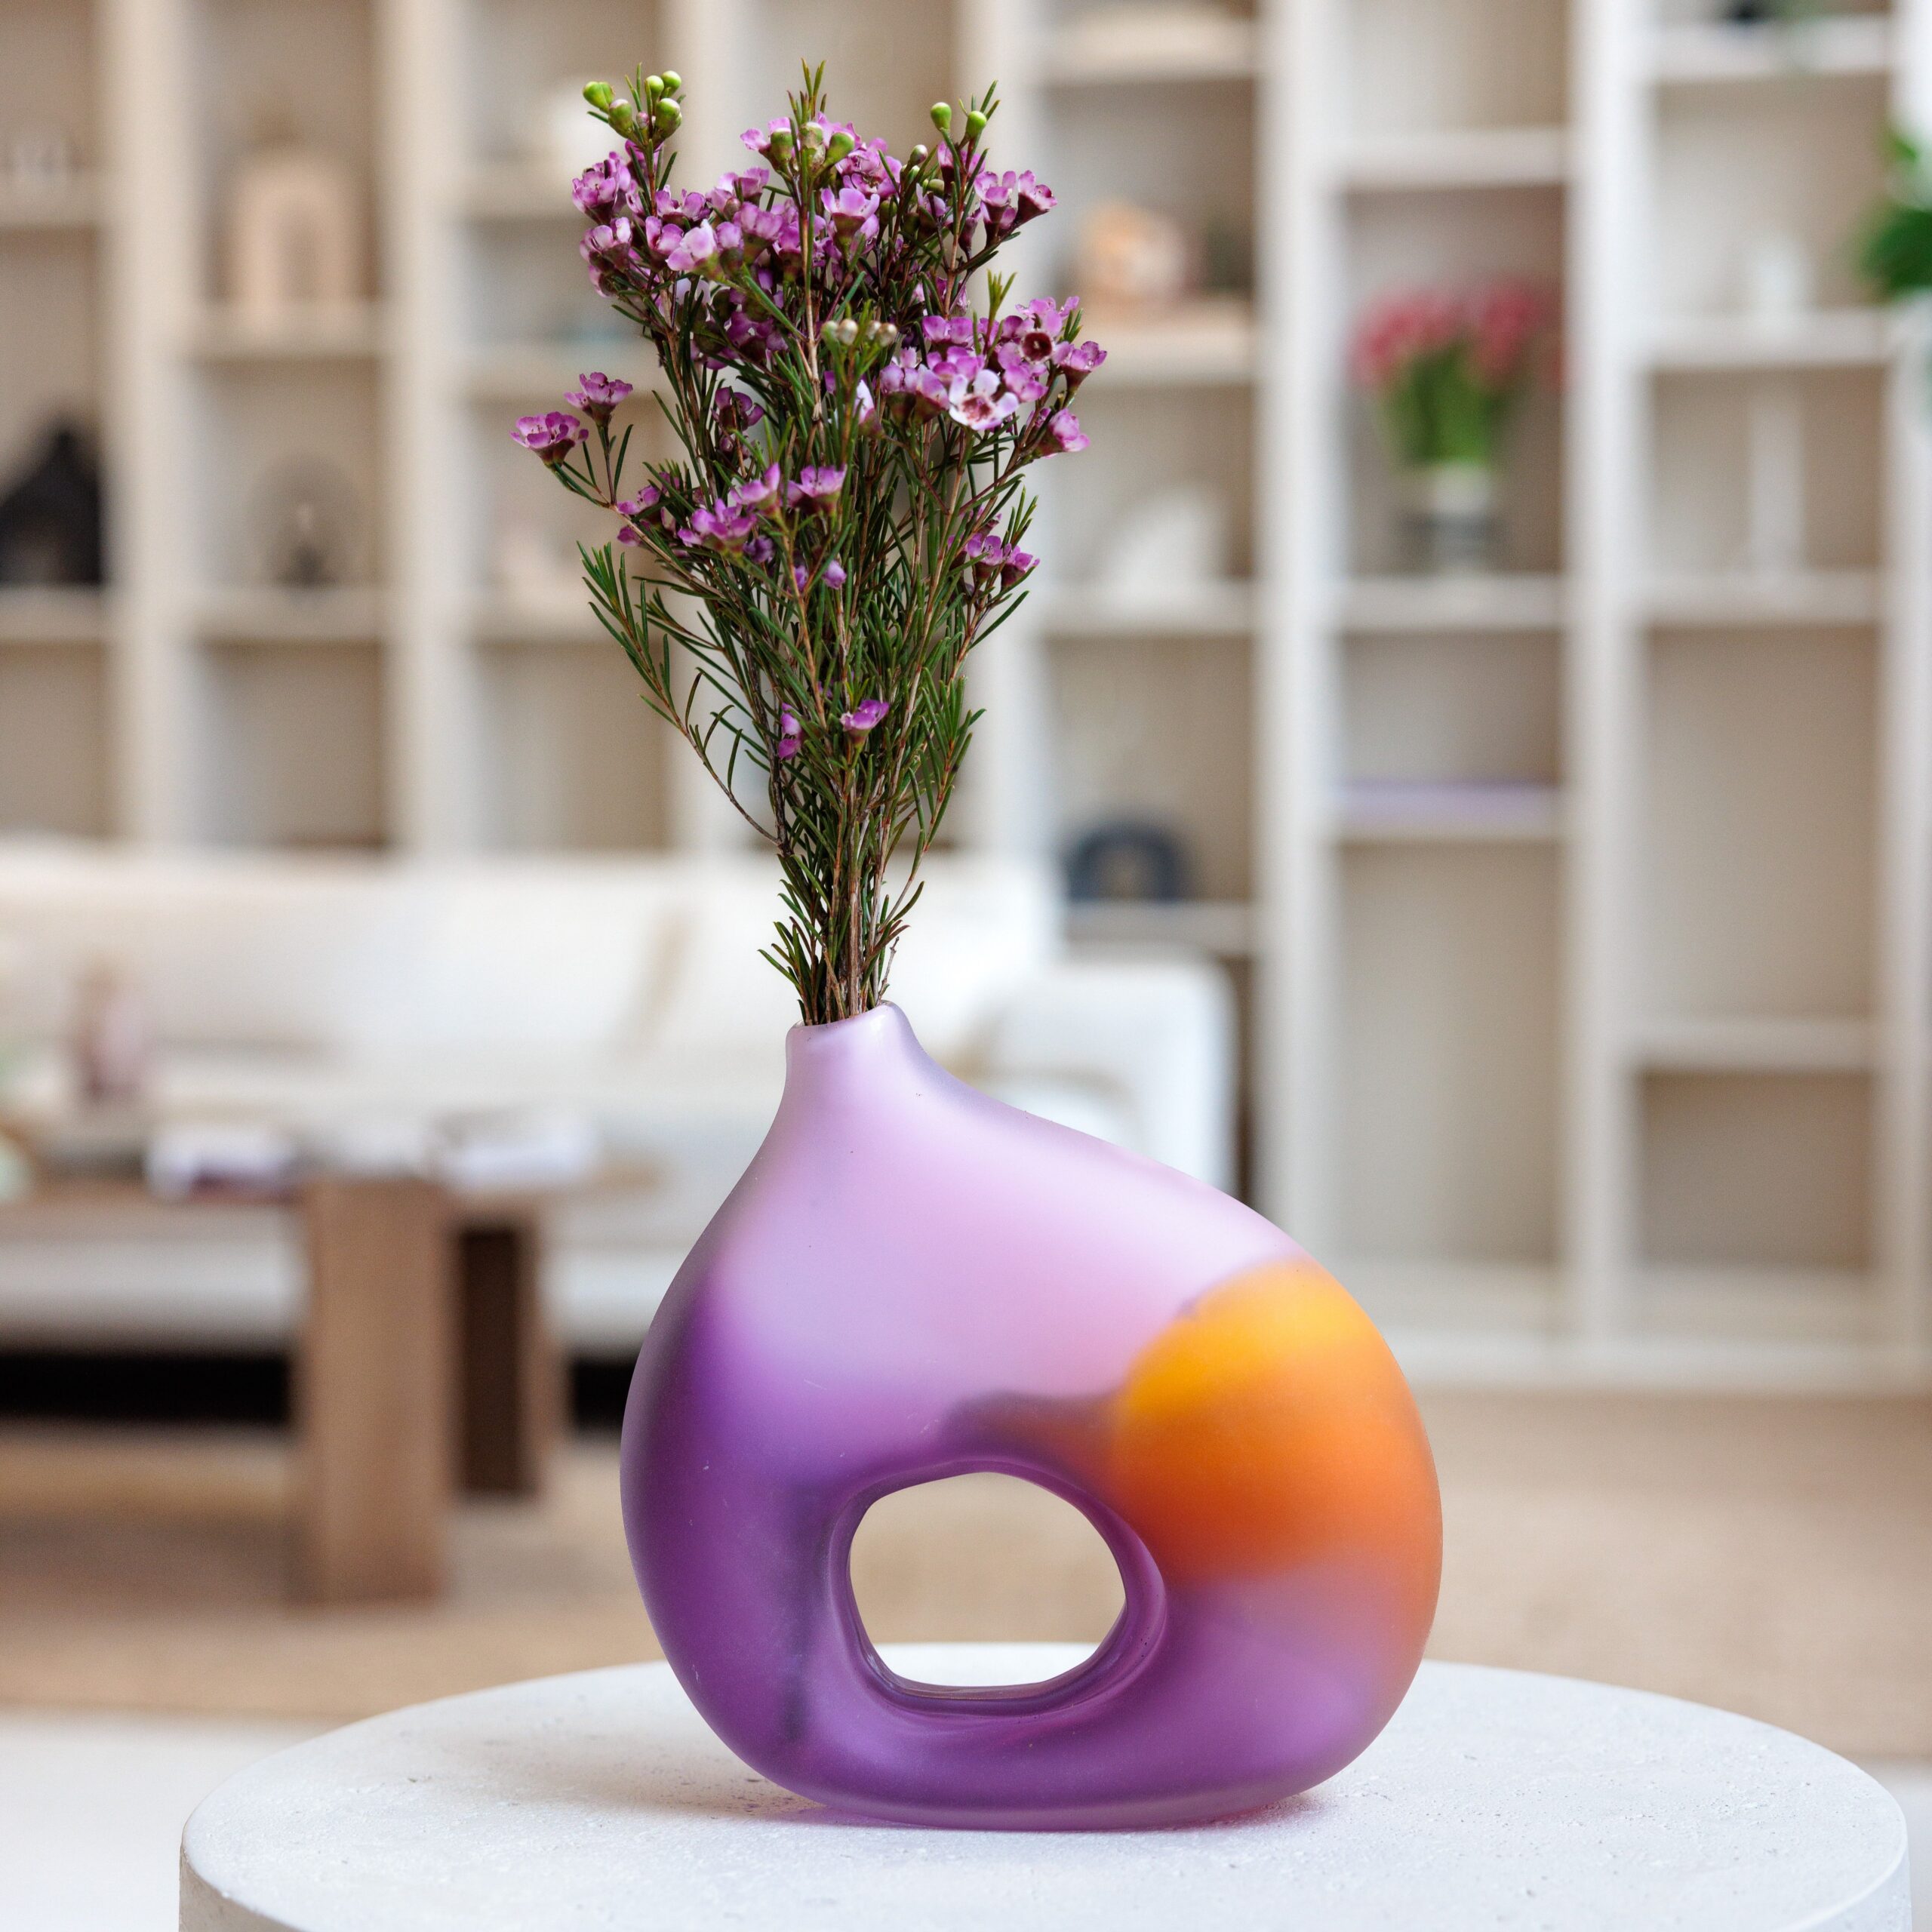 Nadira Narine: Pink Droplet Vase Product Image 1 of 4